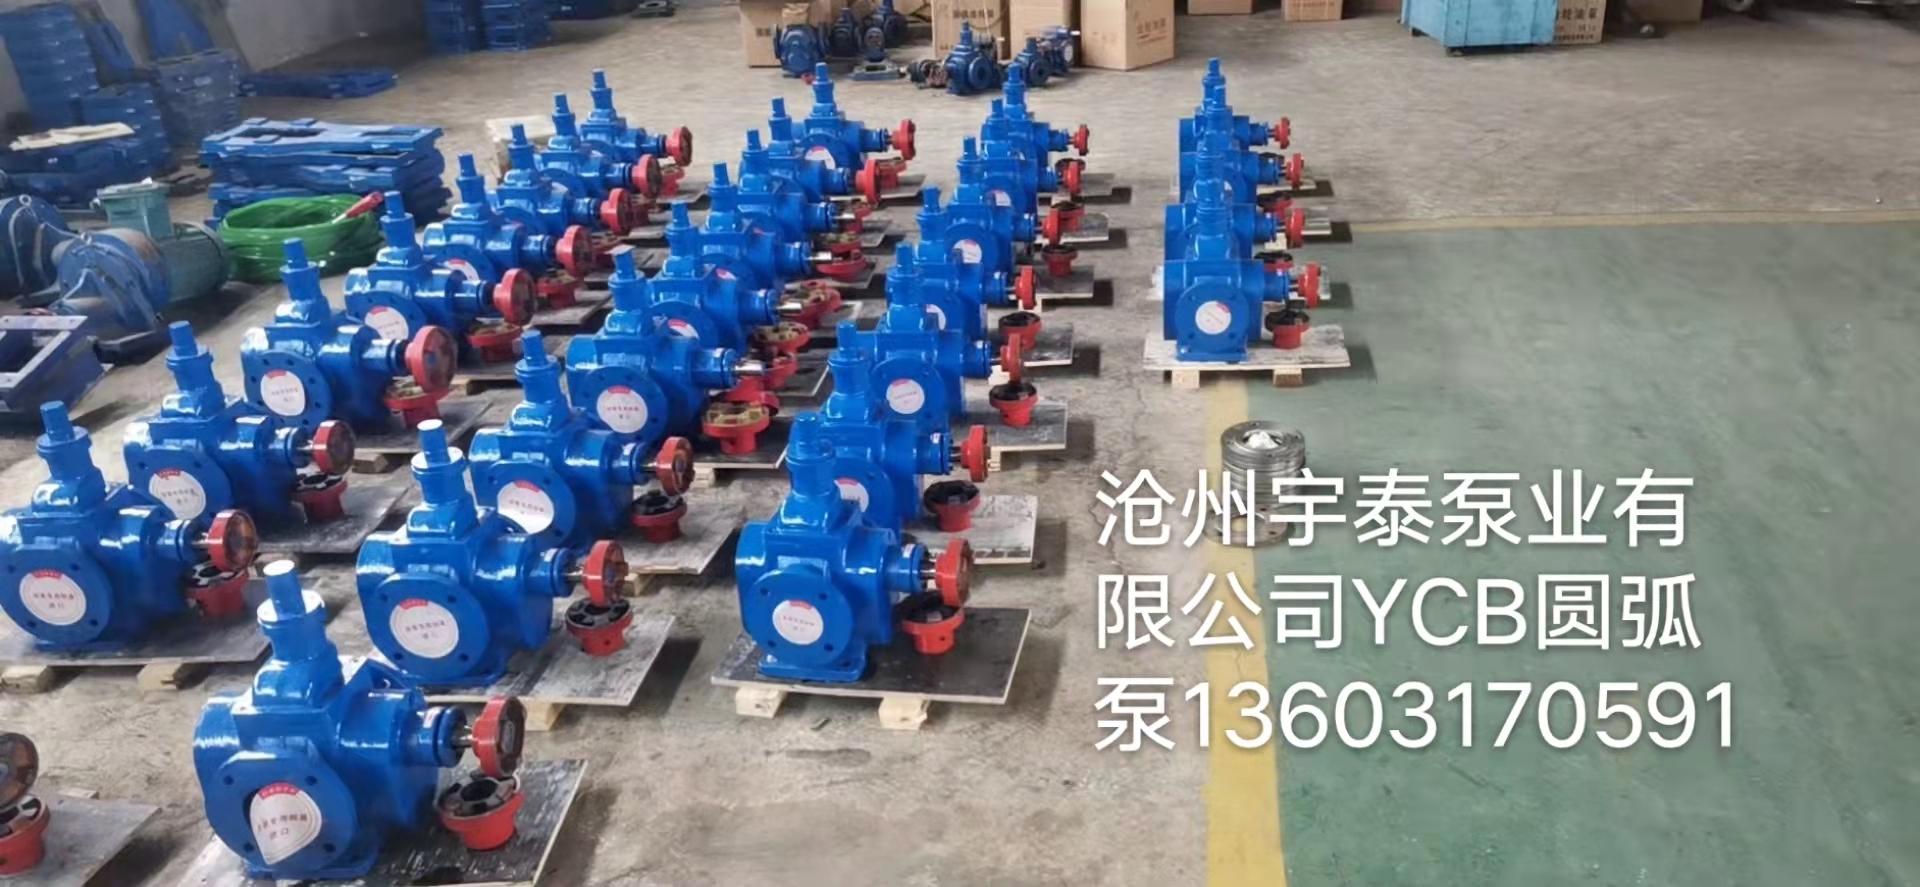 YCB 圆弧泵供应商  YCB 圆弧泵厂家